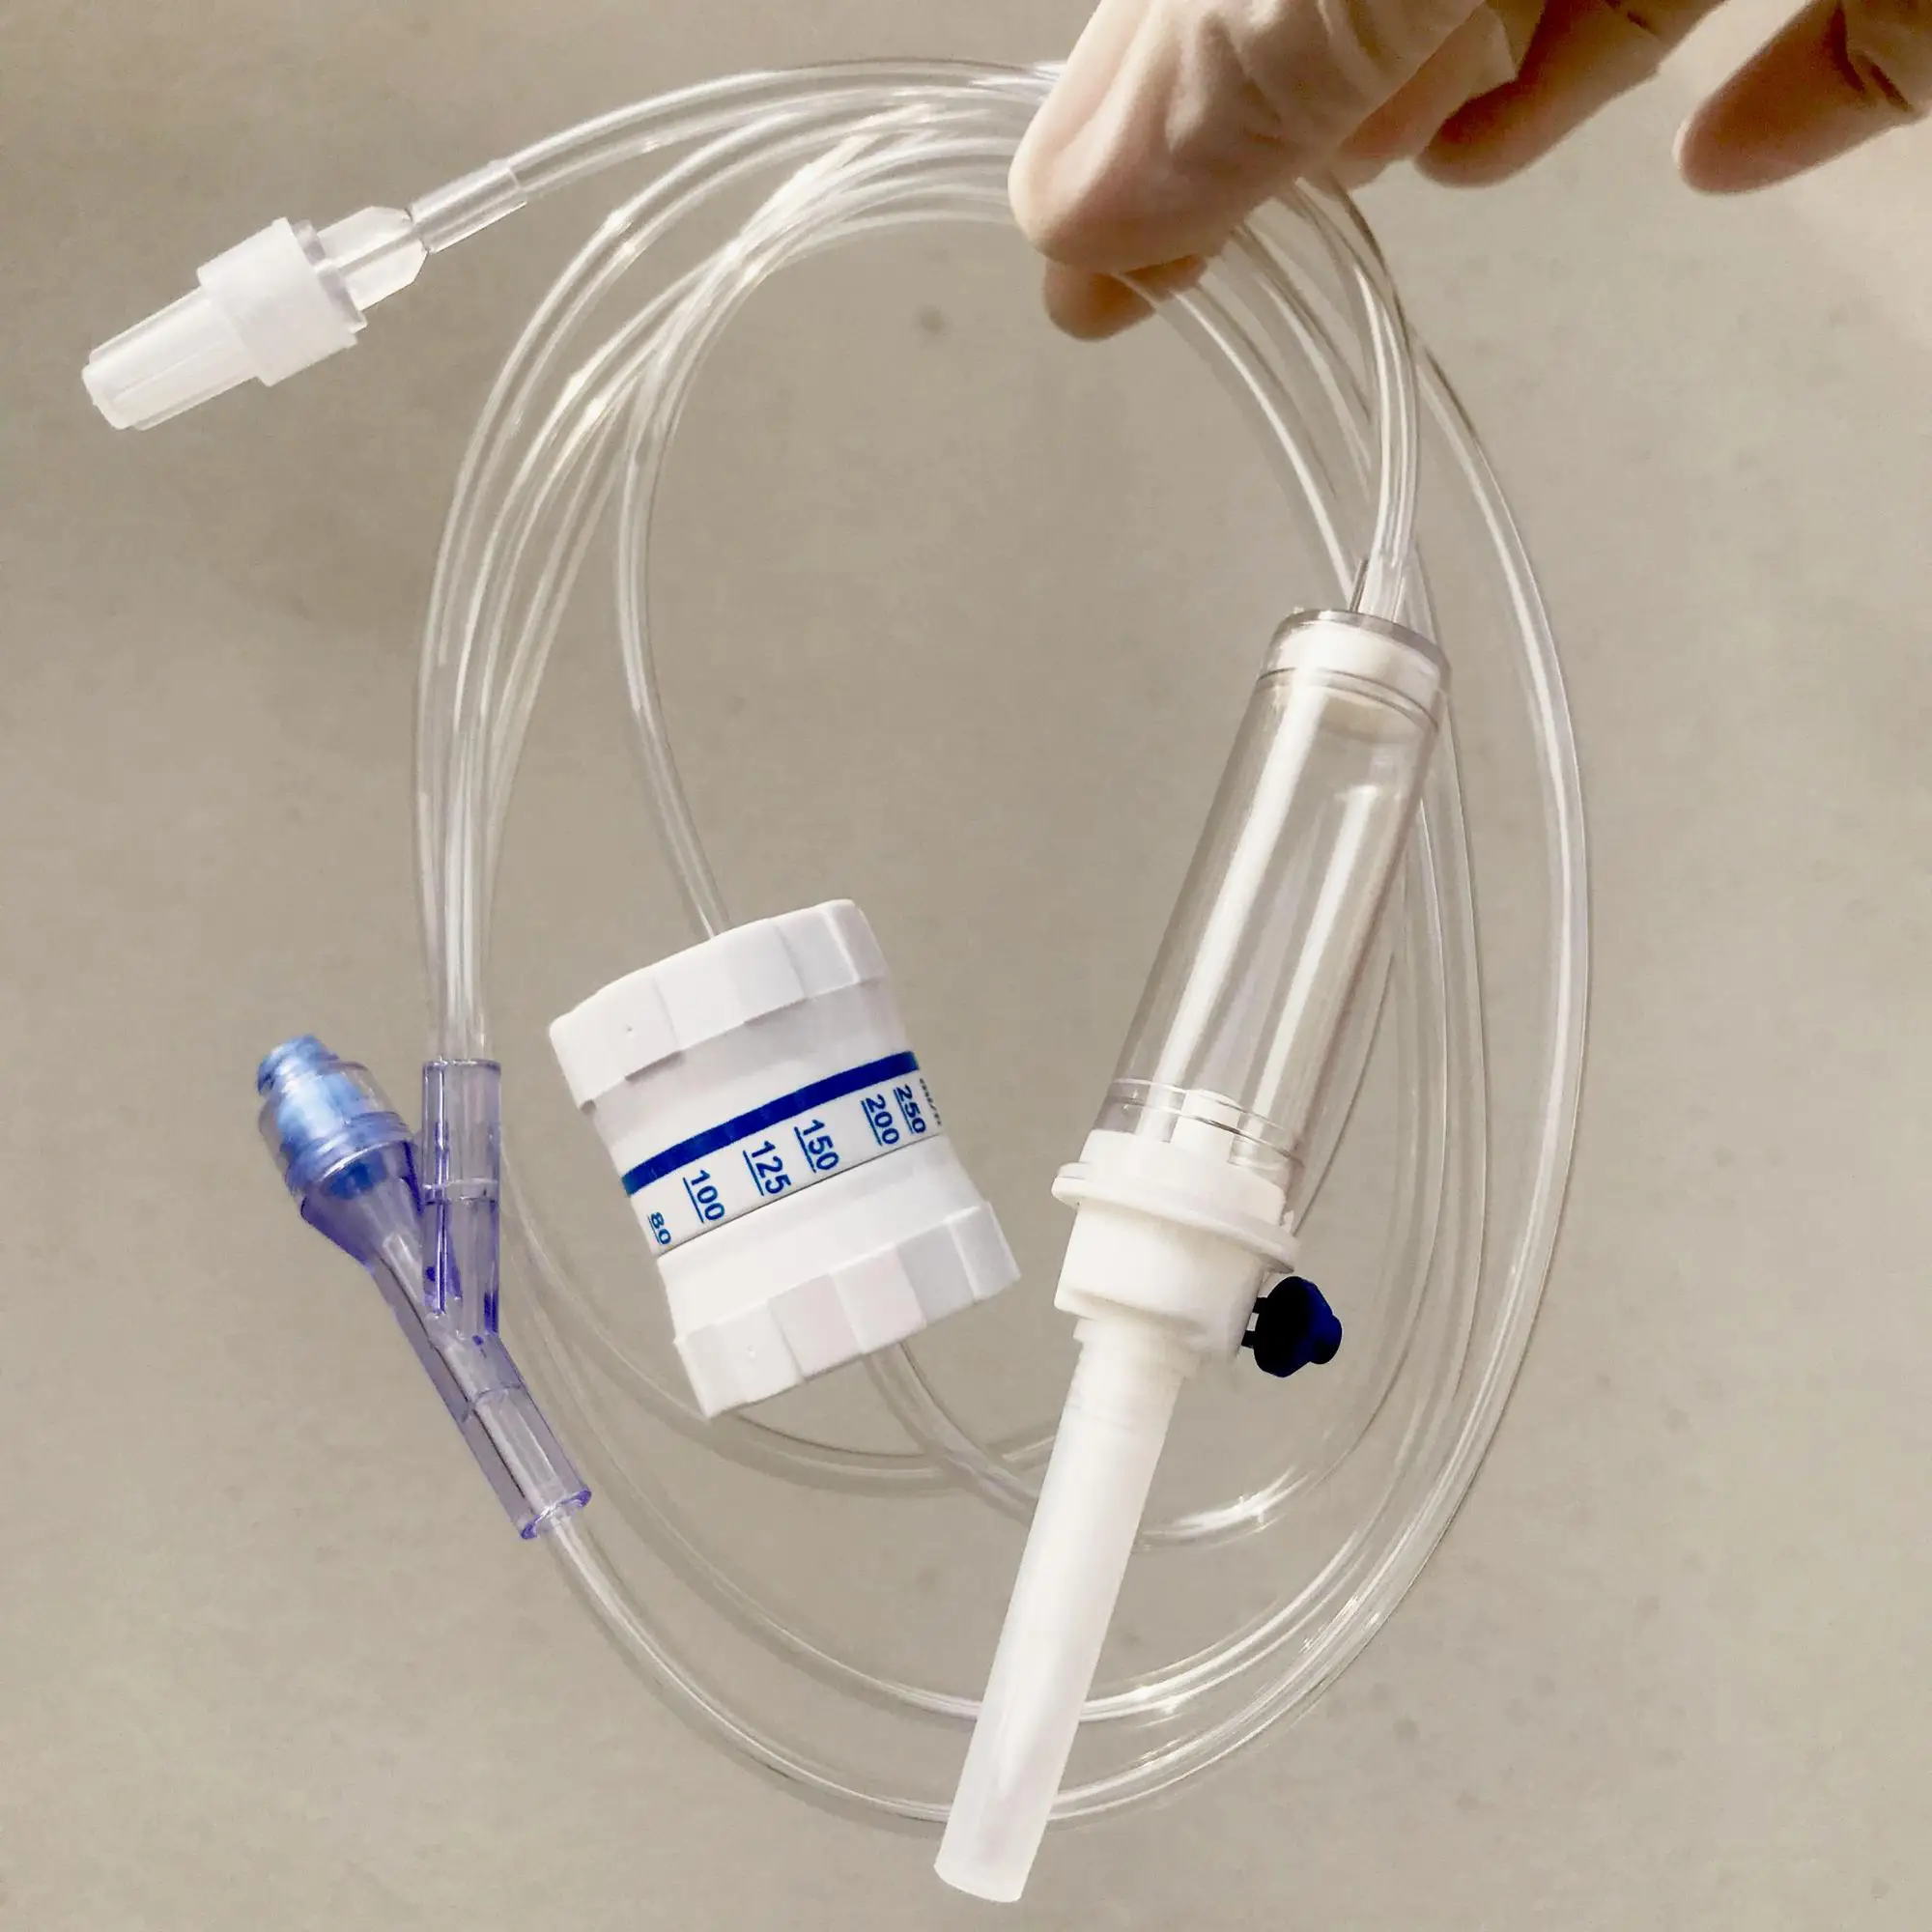 
IV flow regulator infusion set / disposable infusion set  (60646322114)